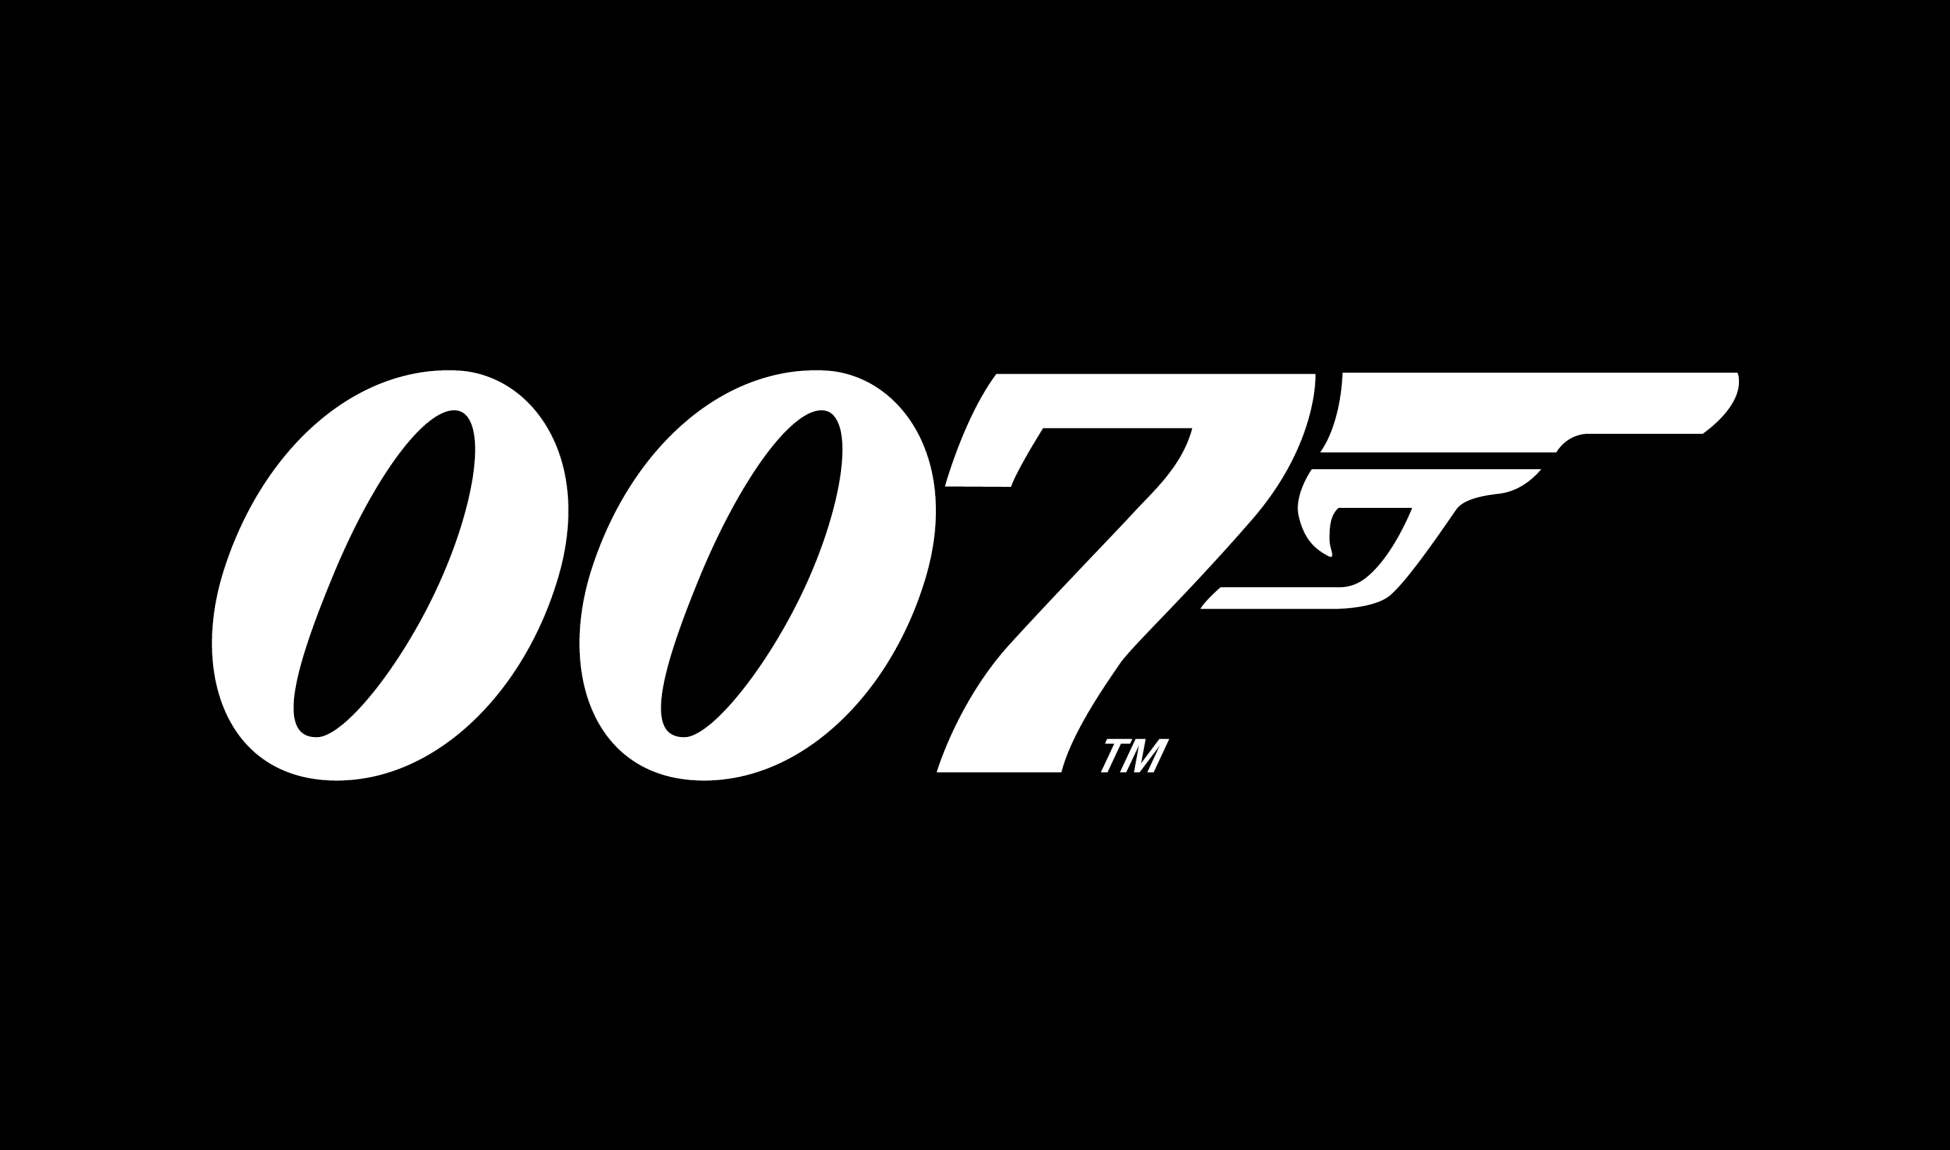 Rami Malek in trattativa per essere il villain di Bond 25